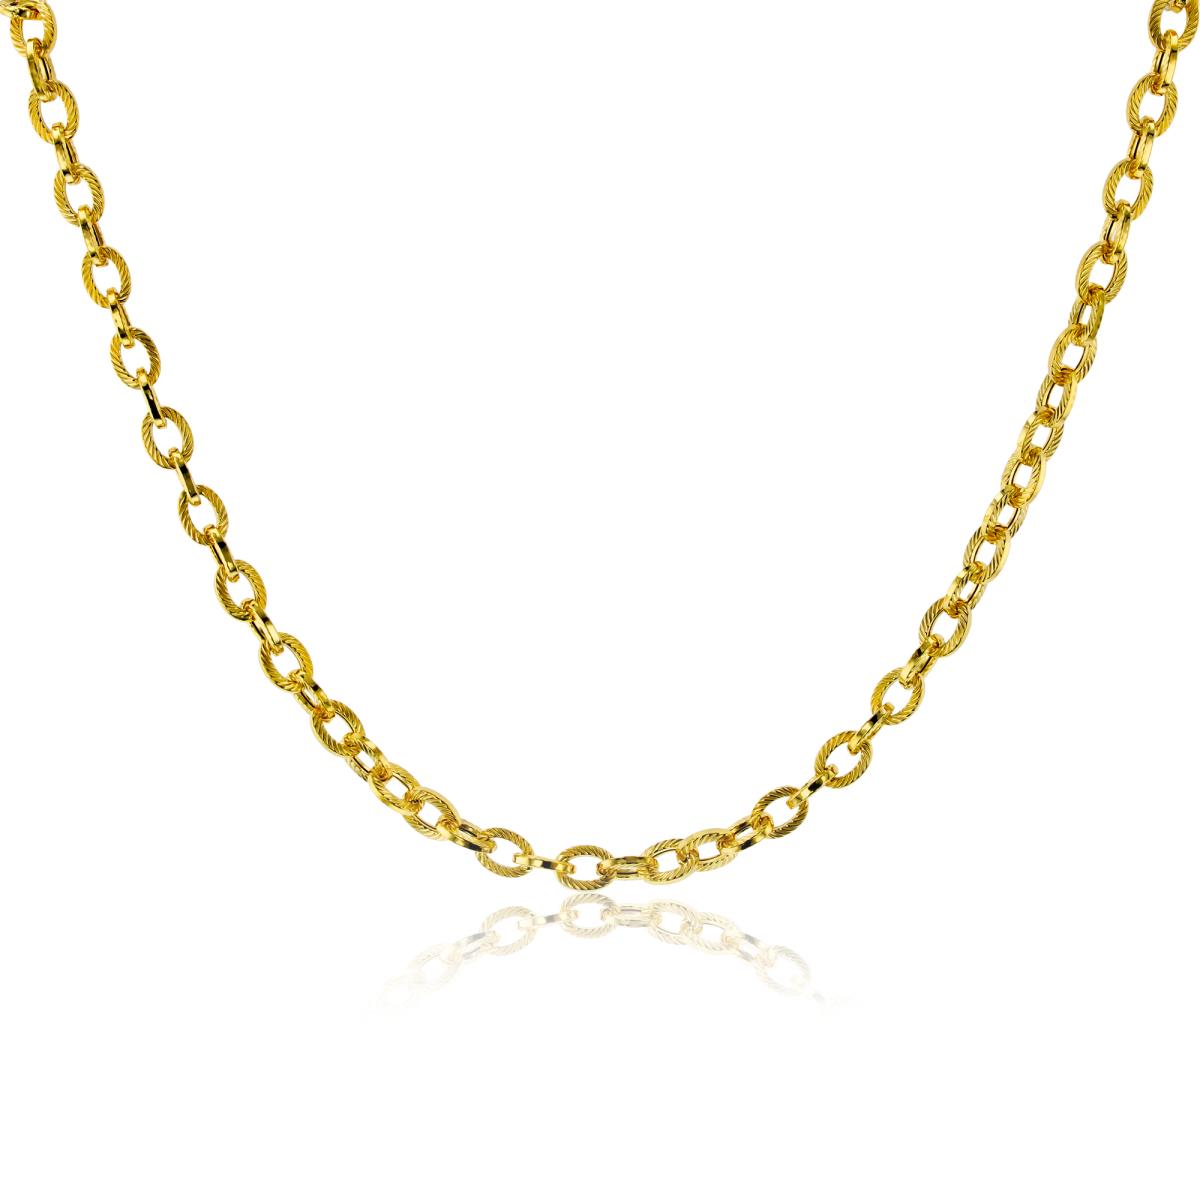 10K Yellow Gold Diamond Cut Open Oval Linked Italian 18"Necklace